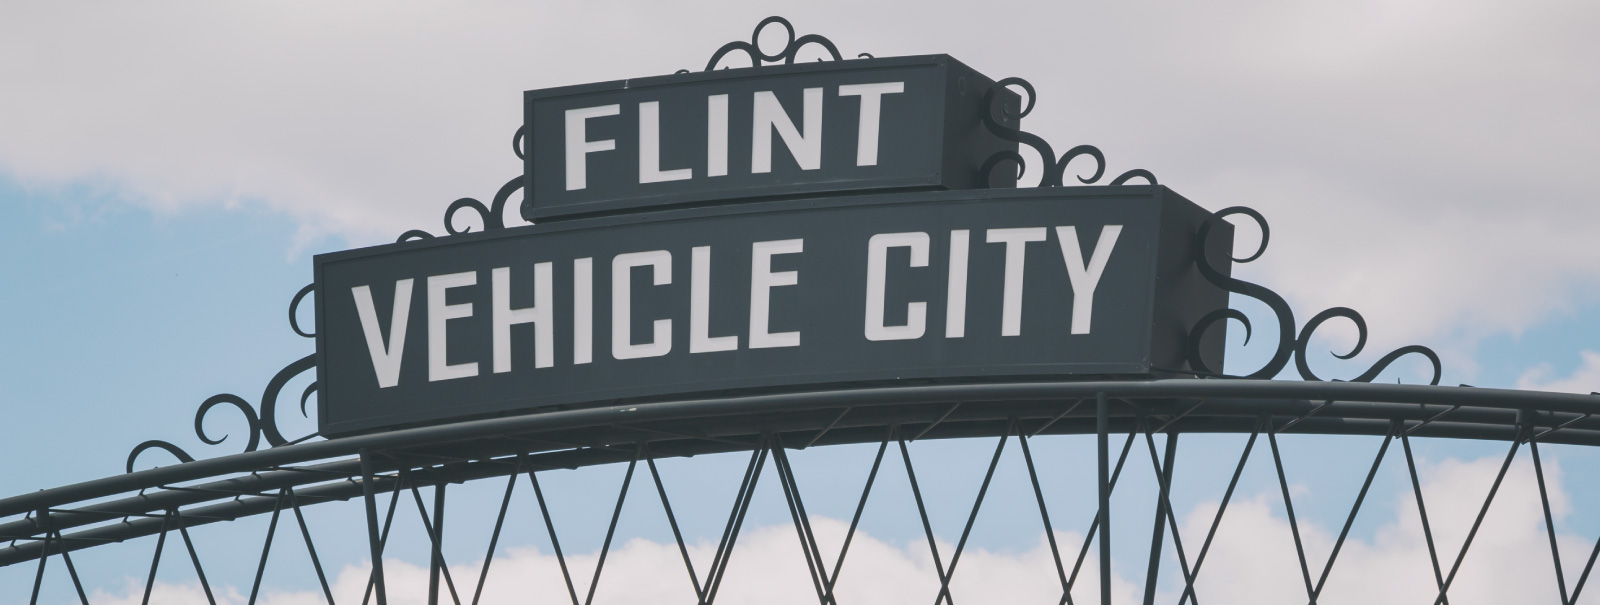 flint vehicle city arch